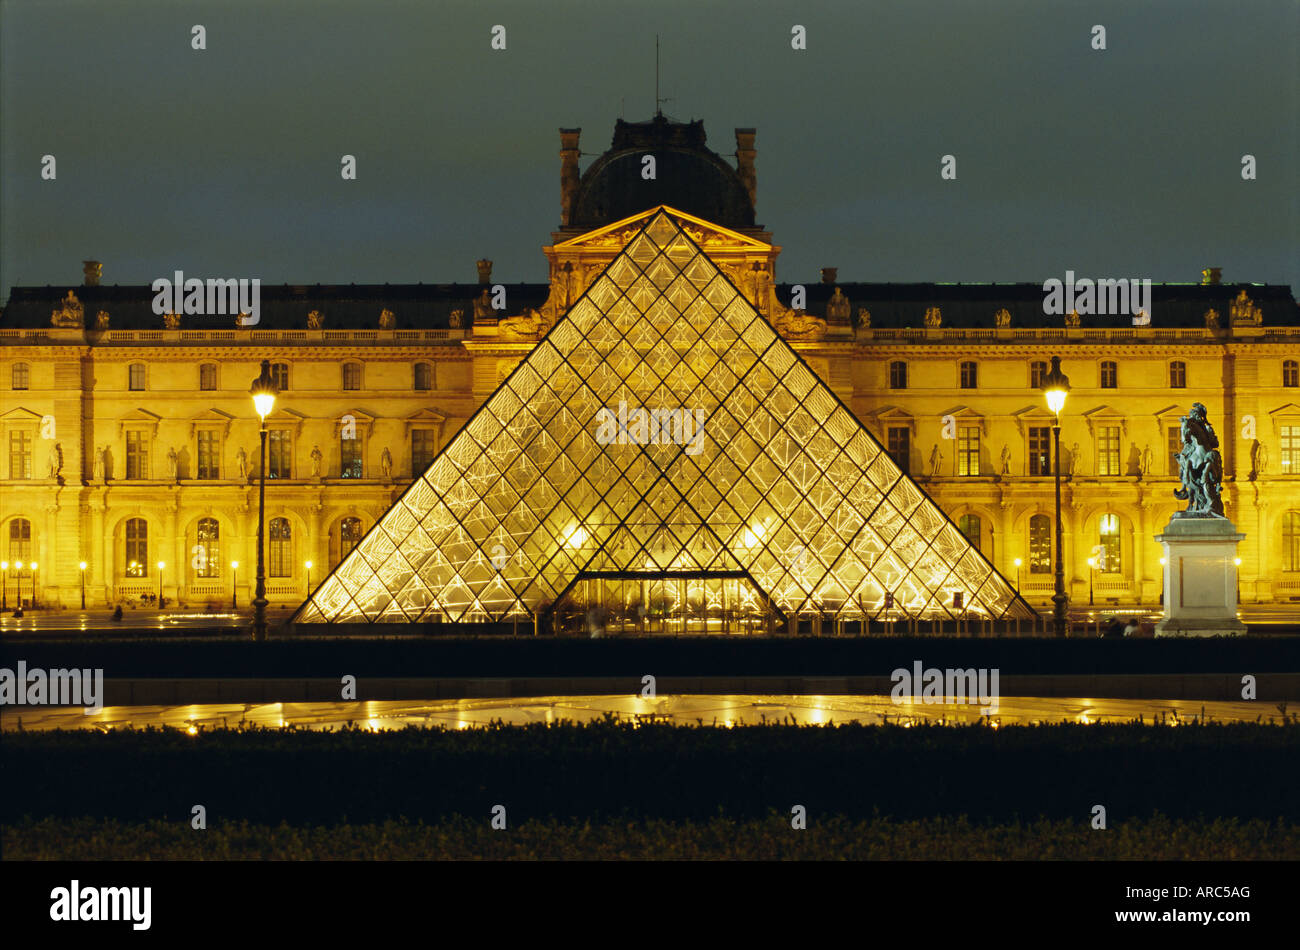 The Louvre and pyramid illuminated at night, Paris, France, Europe Stock Photo